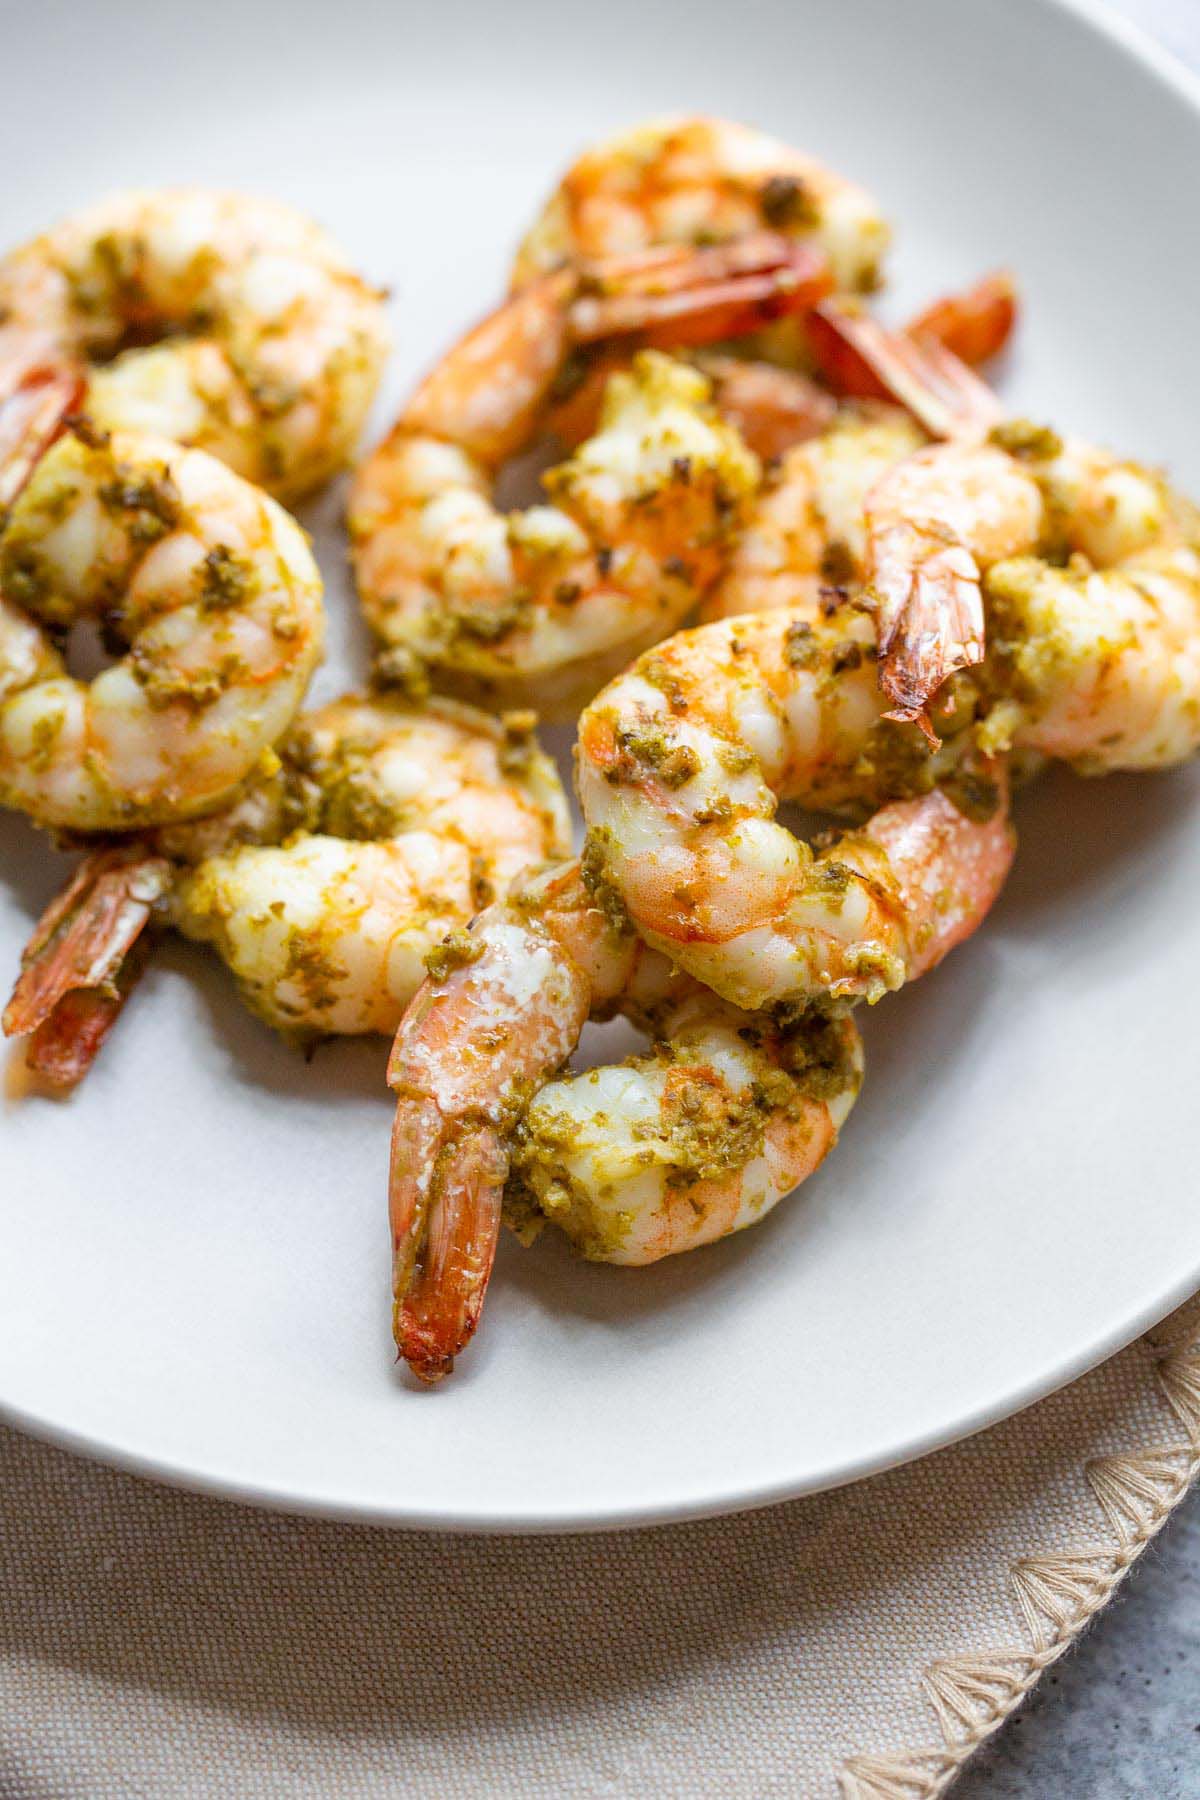 Pesto shrimp on a plate.